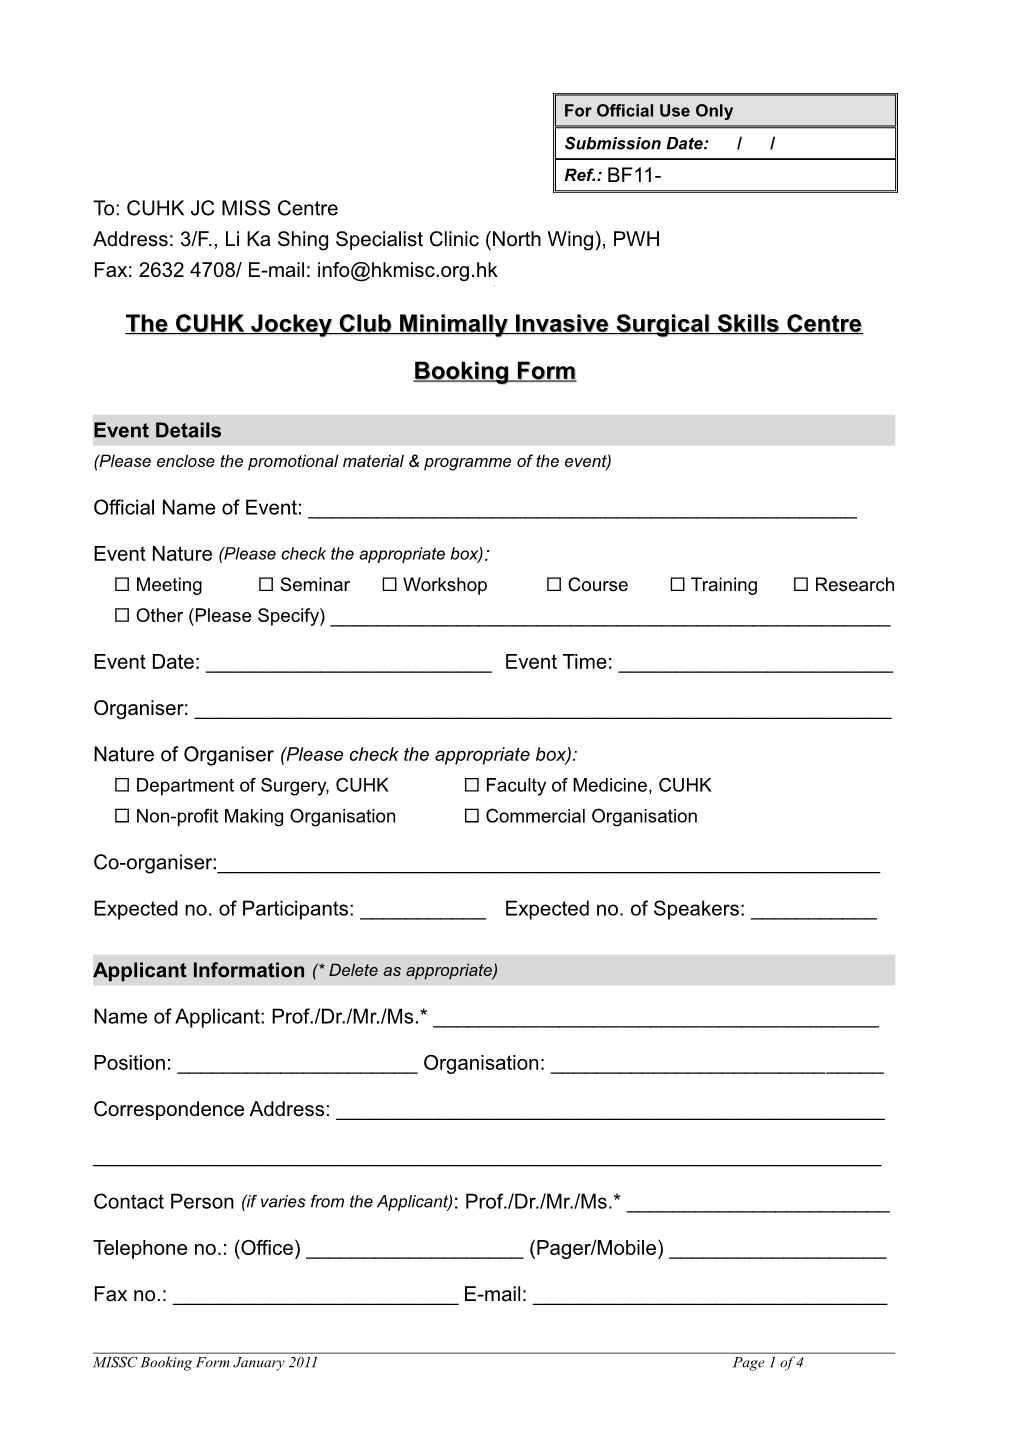 The CUHK Jockey Club Minimally Invasive Surgical Skills Centre